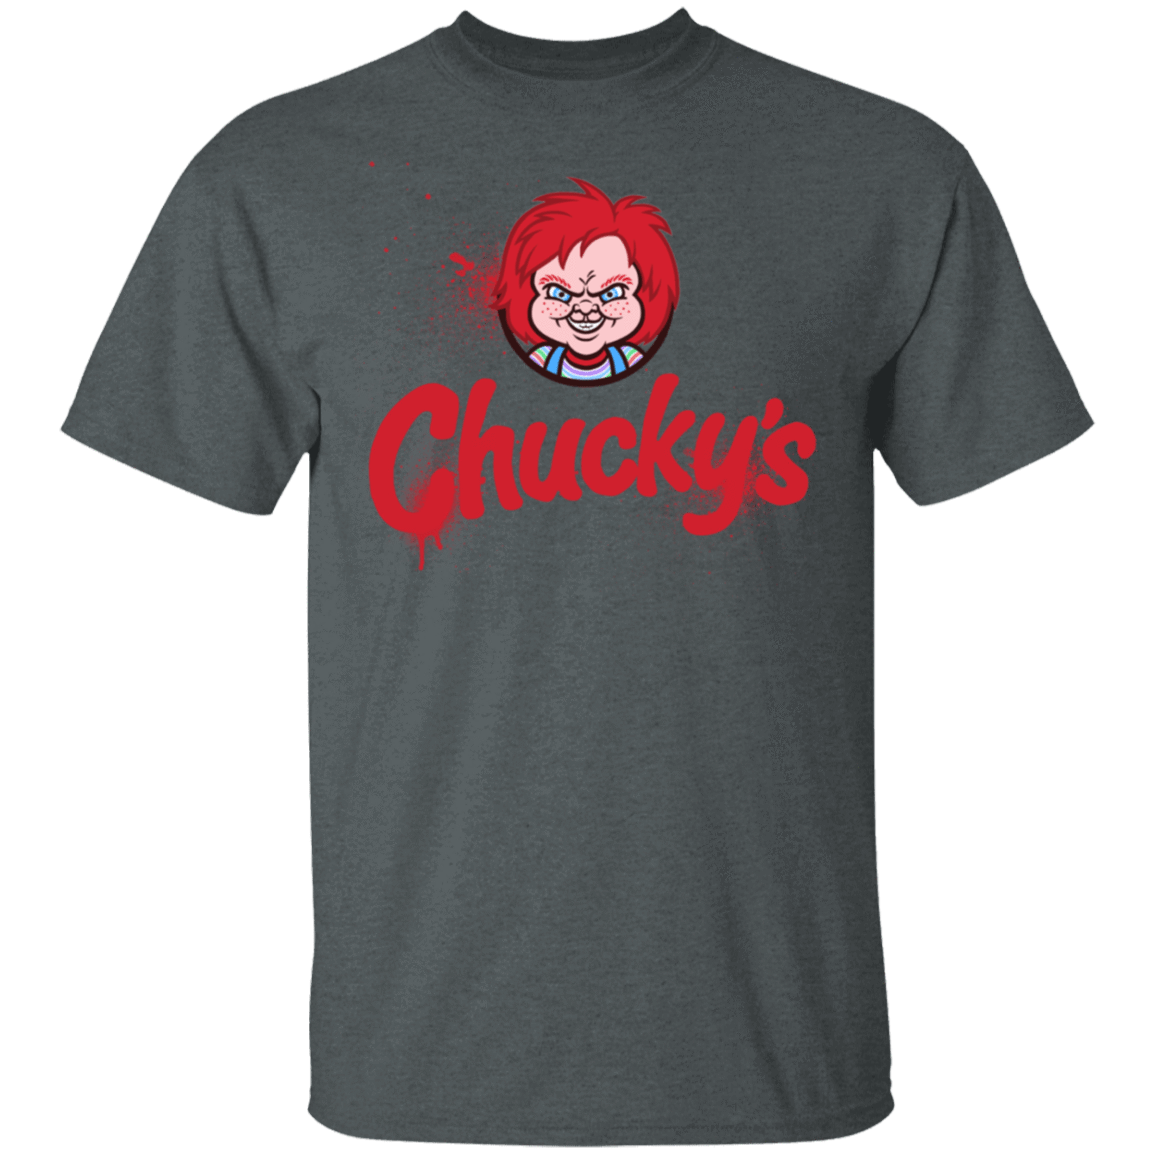 T-Shirts Dark Heather / S Chuckys Logo T-Shirt